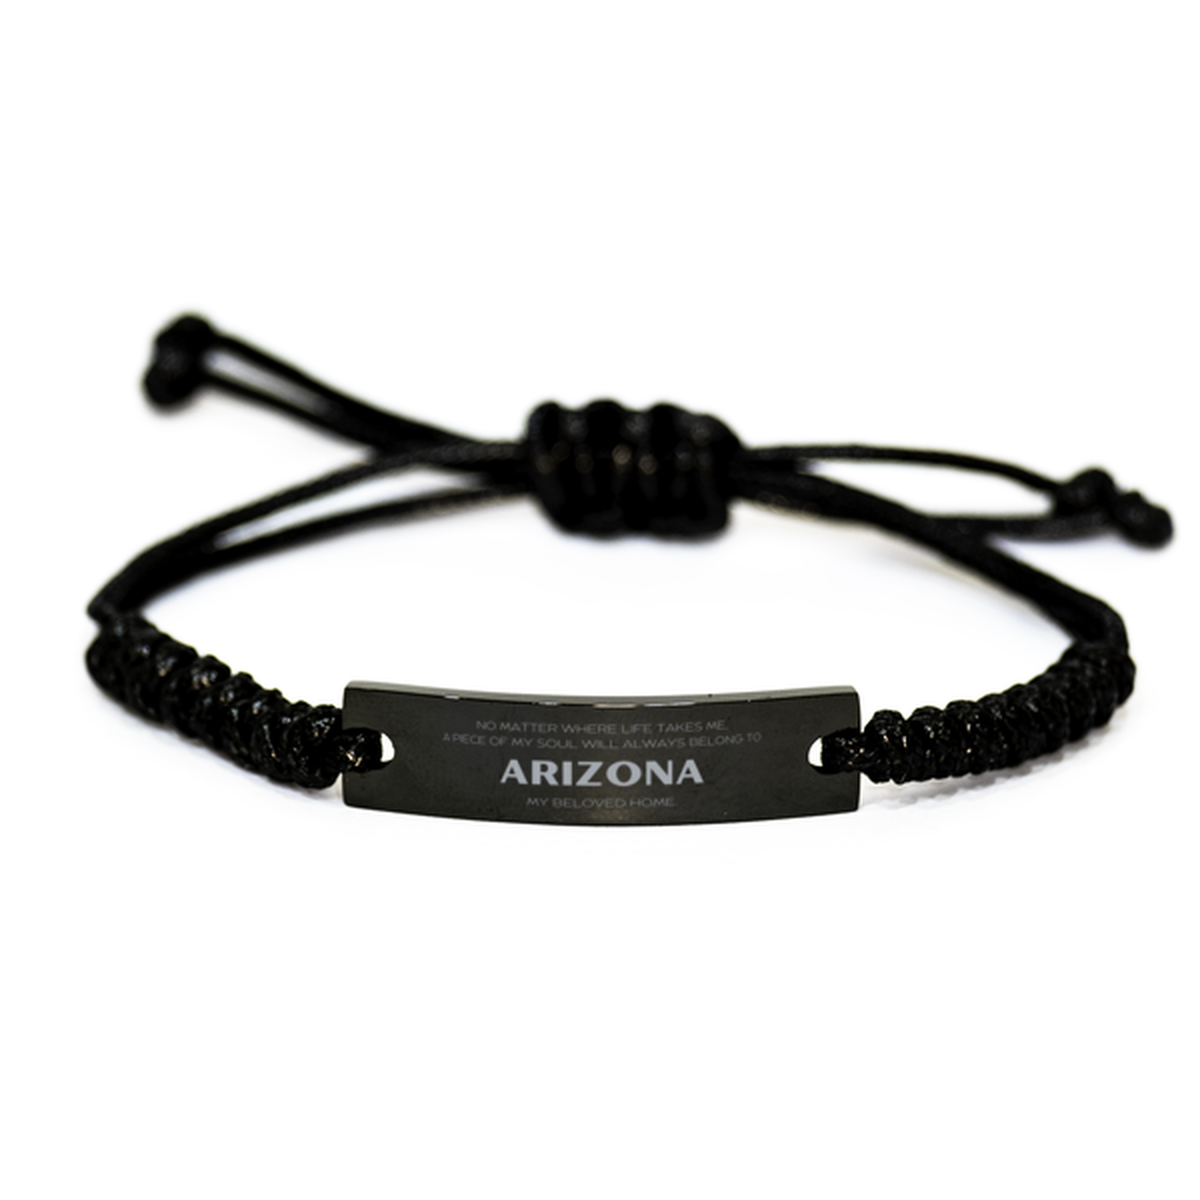 Love Arizona State Gifts, My soul will always belong to Arizona, Proud Black Rope Bracelet, Birthday Unique Gifts For Arizona Men, Women, Friends